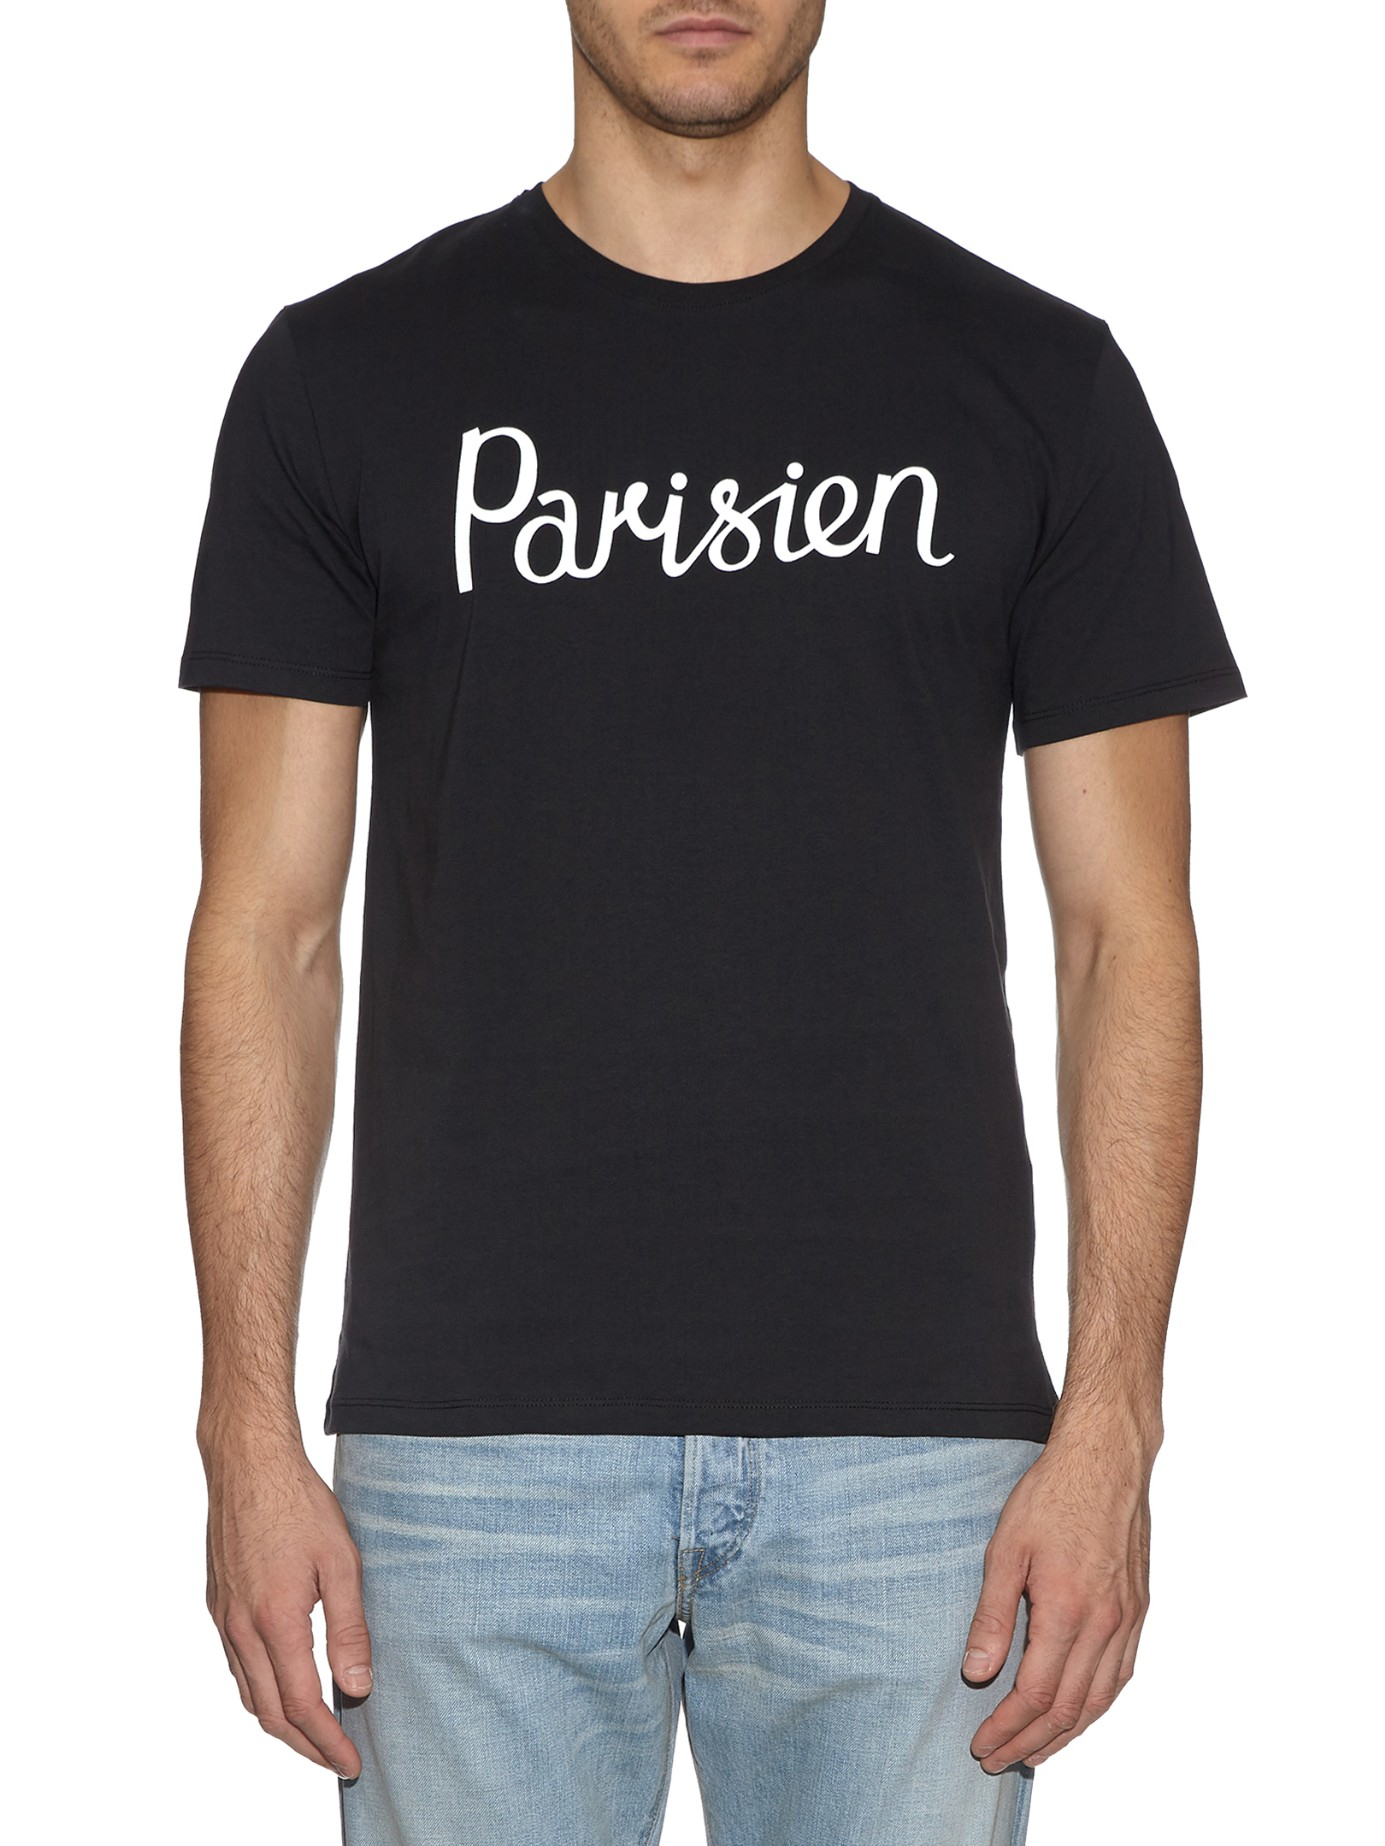 Maison kitsuné 'Parisien' Printed Logo T-Shirt in Black for Men | Lyst